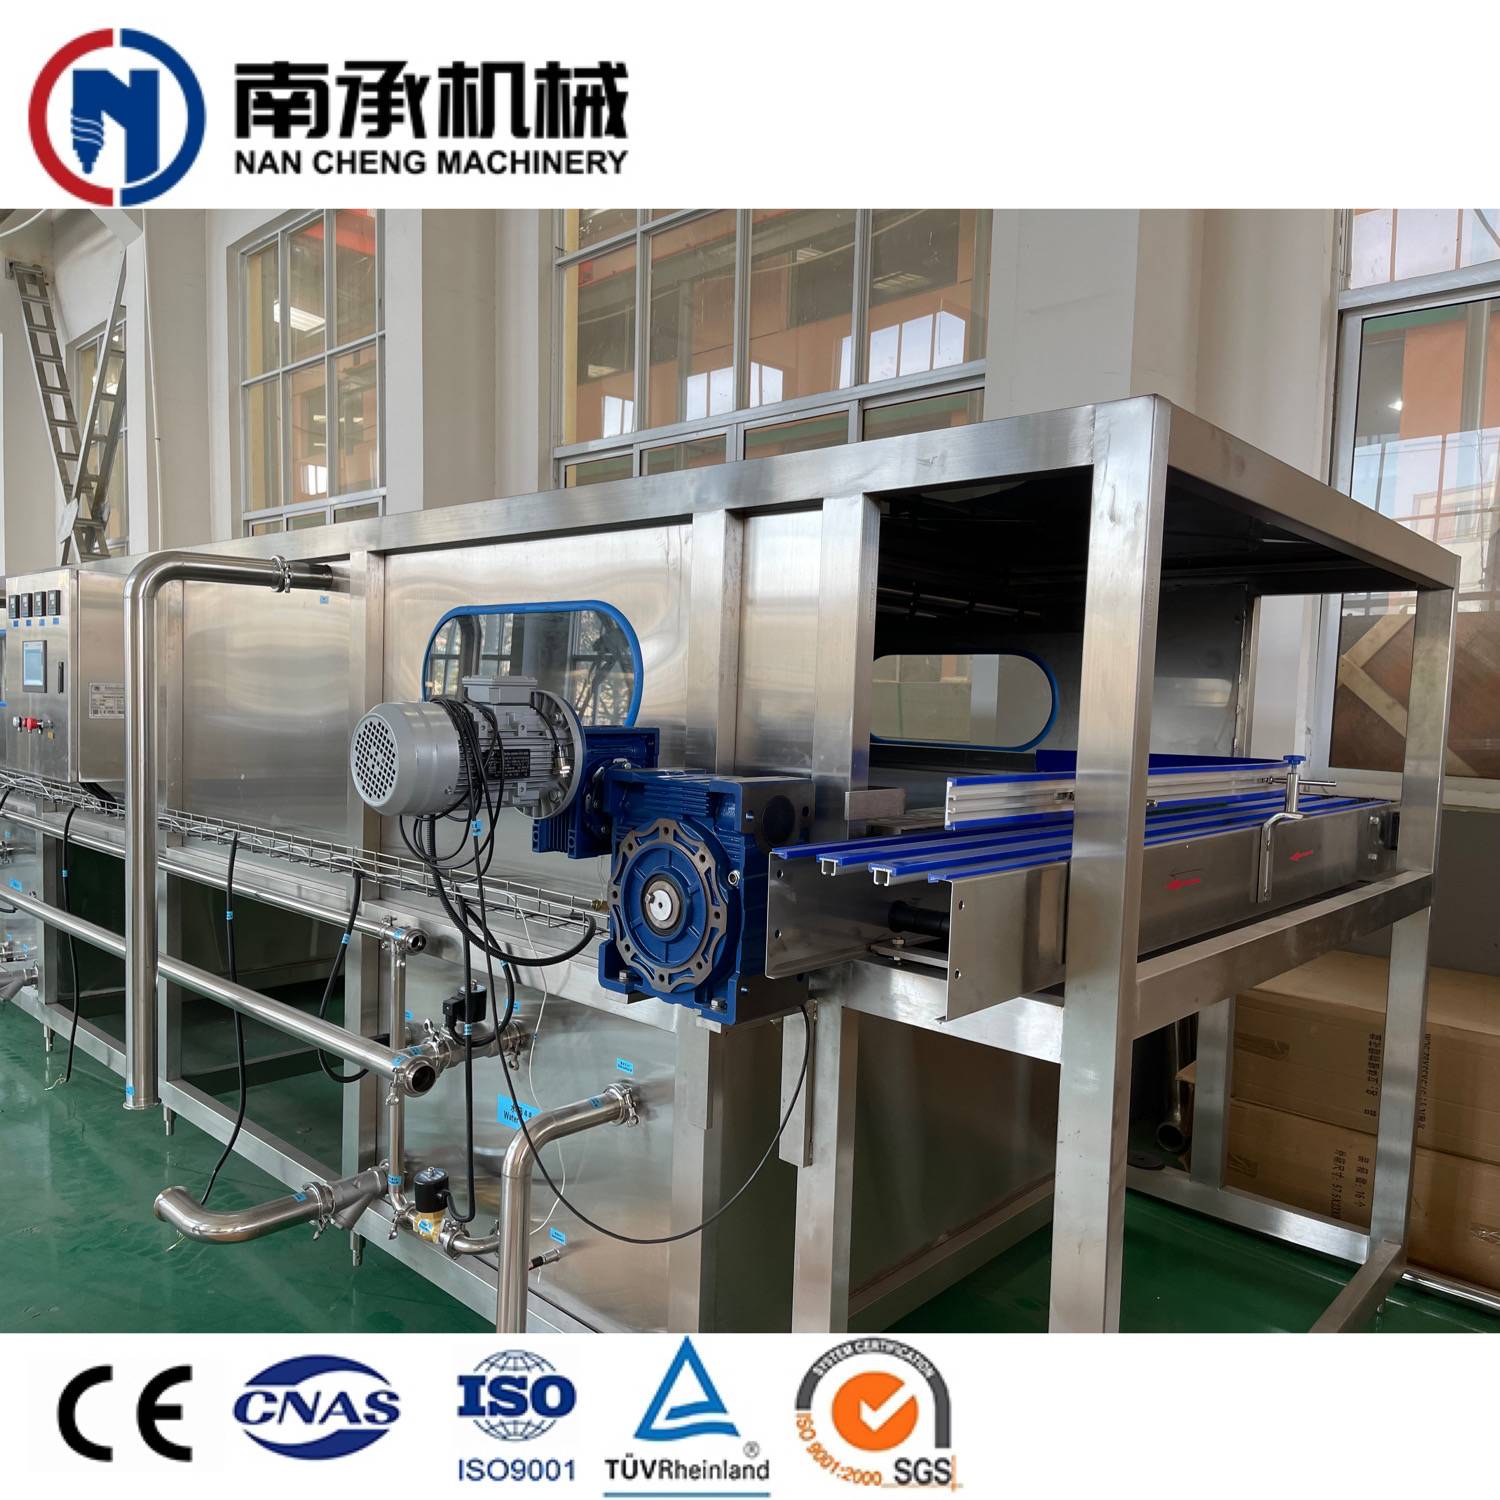 NC-series  Beverage Bottle Warming Machine /spray Cooling Machine /Tunnel Pasteurization